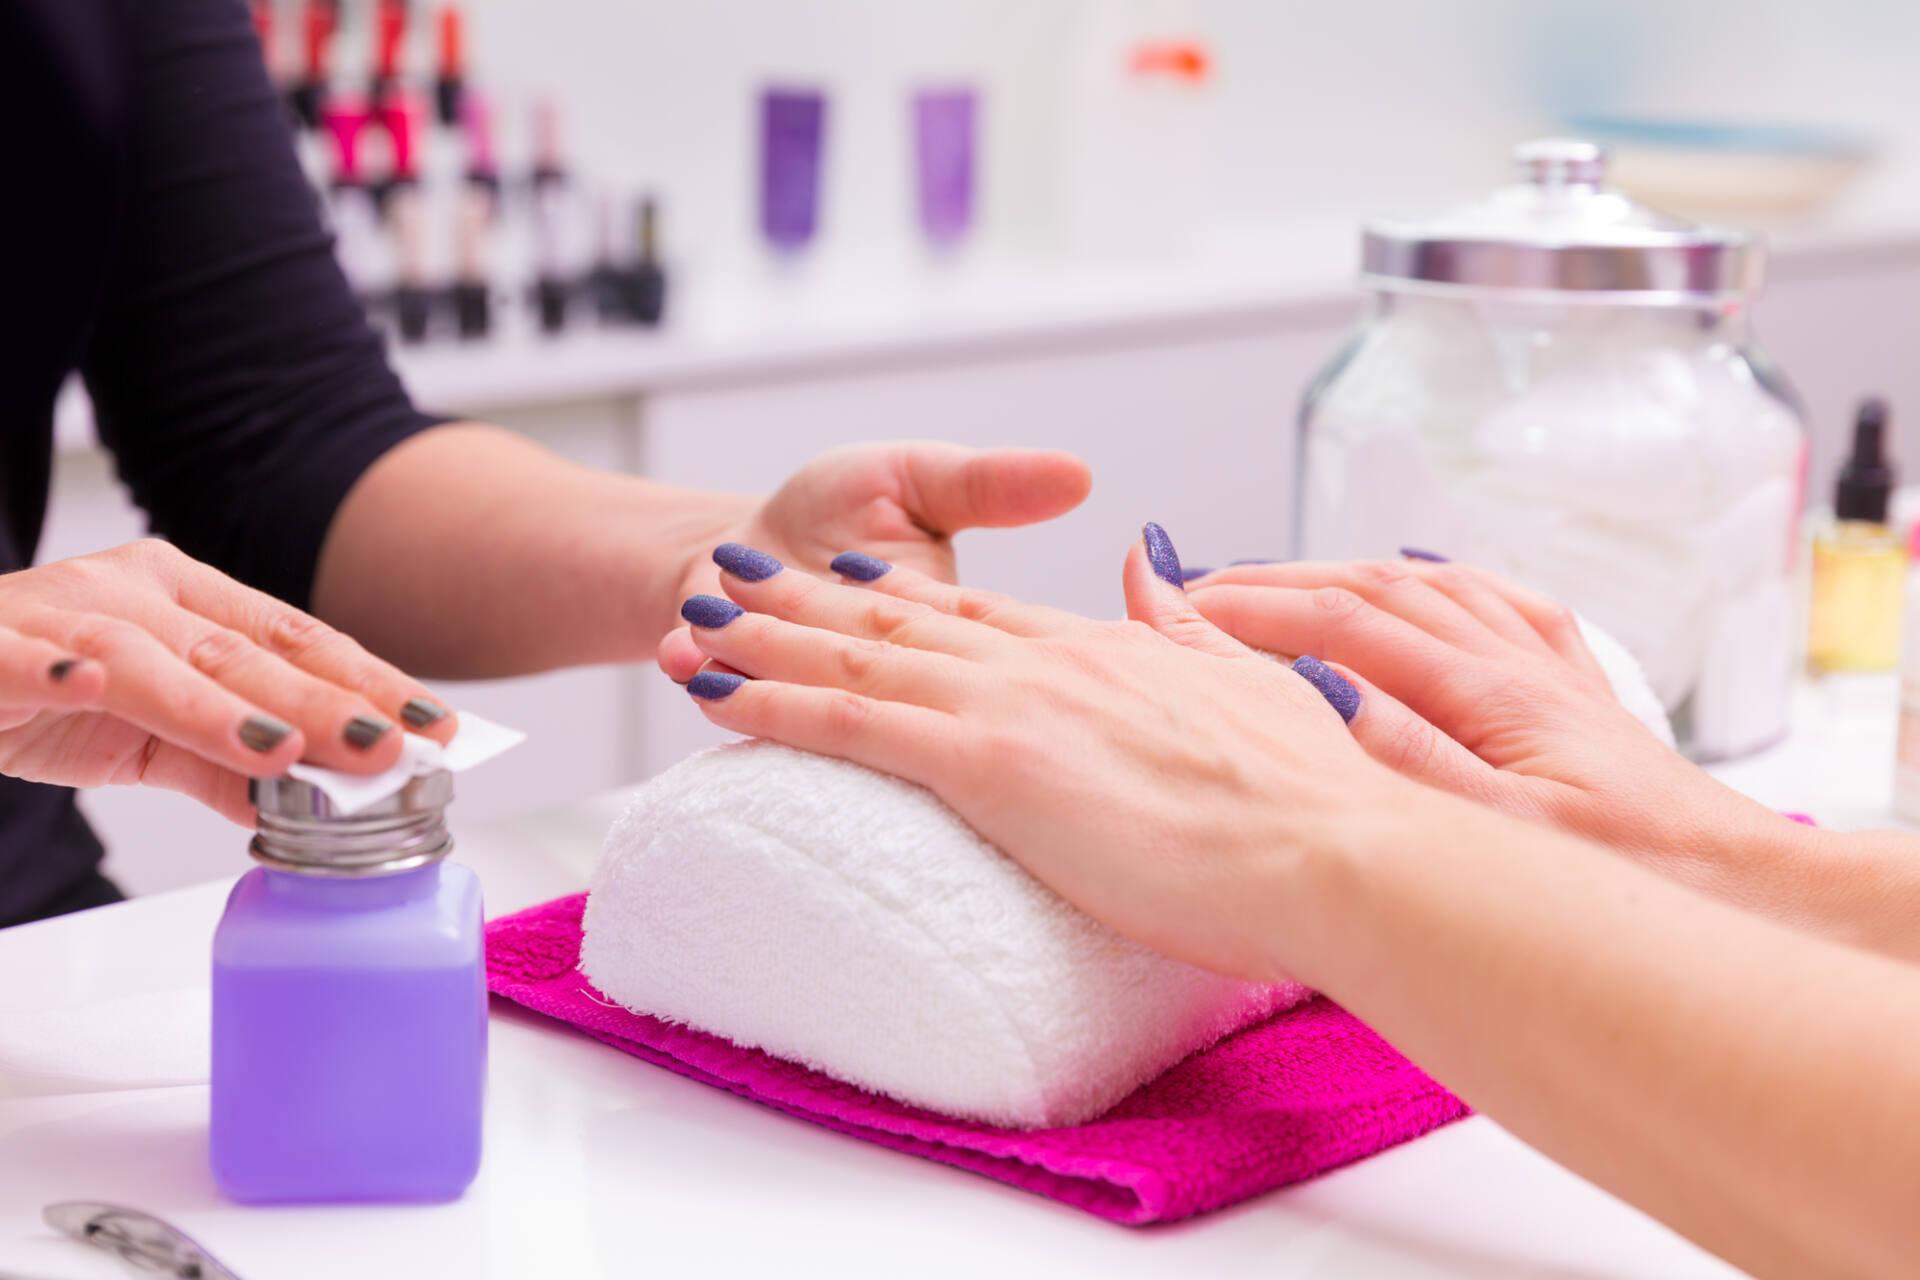 Avoid using harsh nail polish removers: